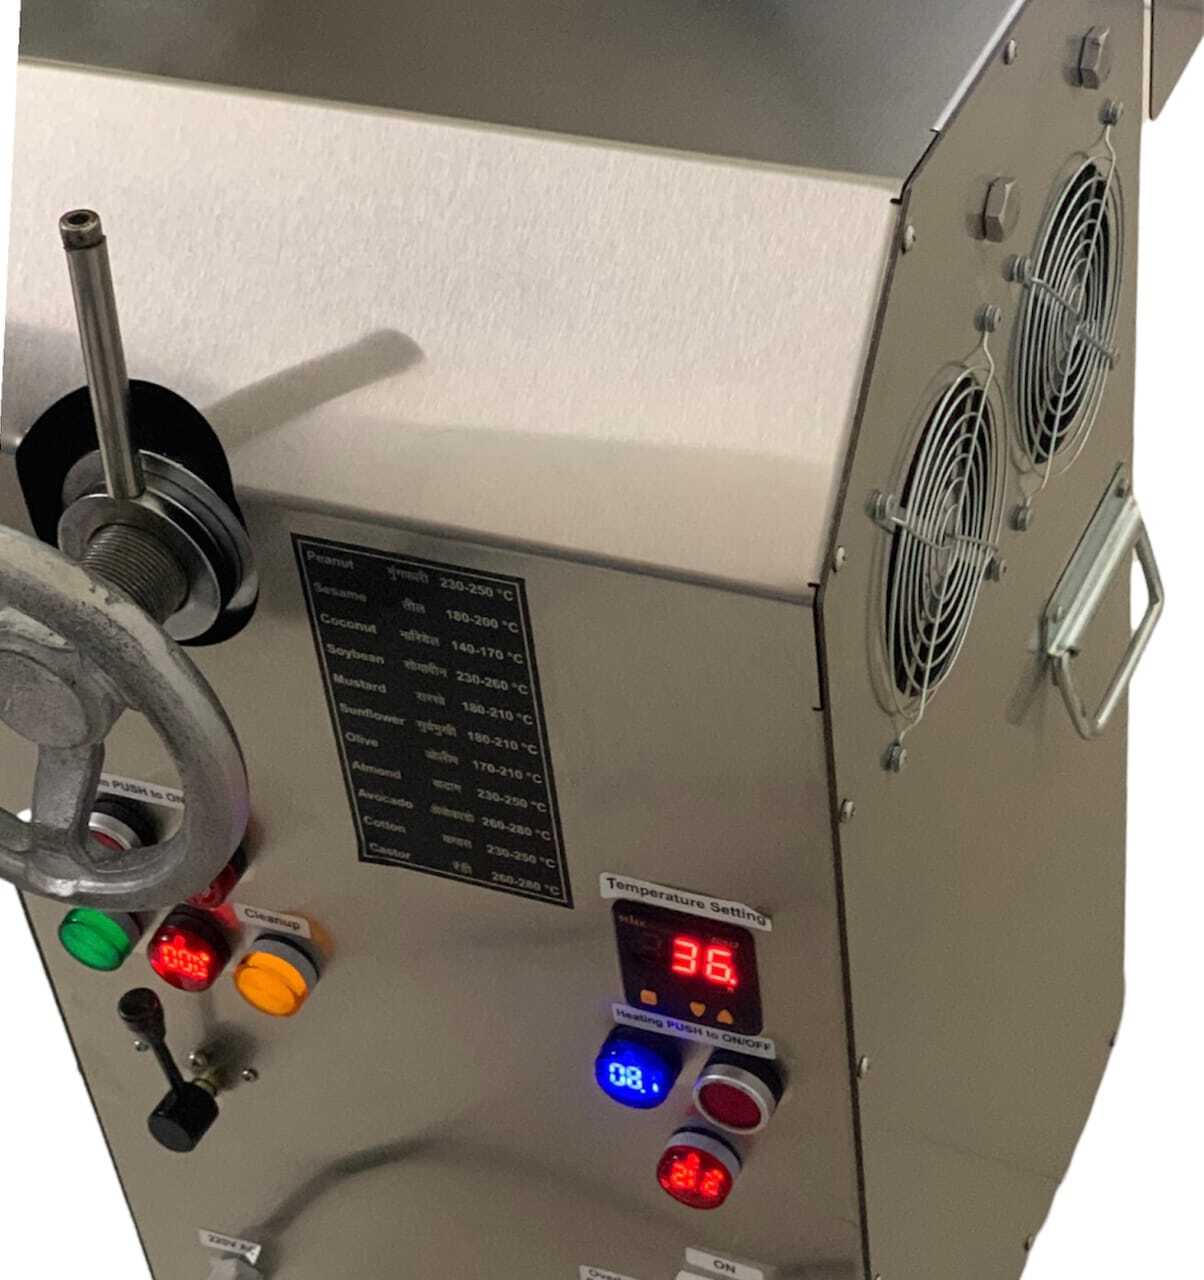 Cold Press Oil Expeller  Machine 4500 Watt